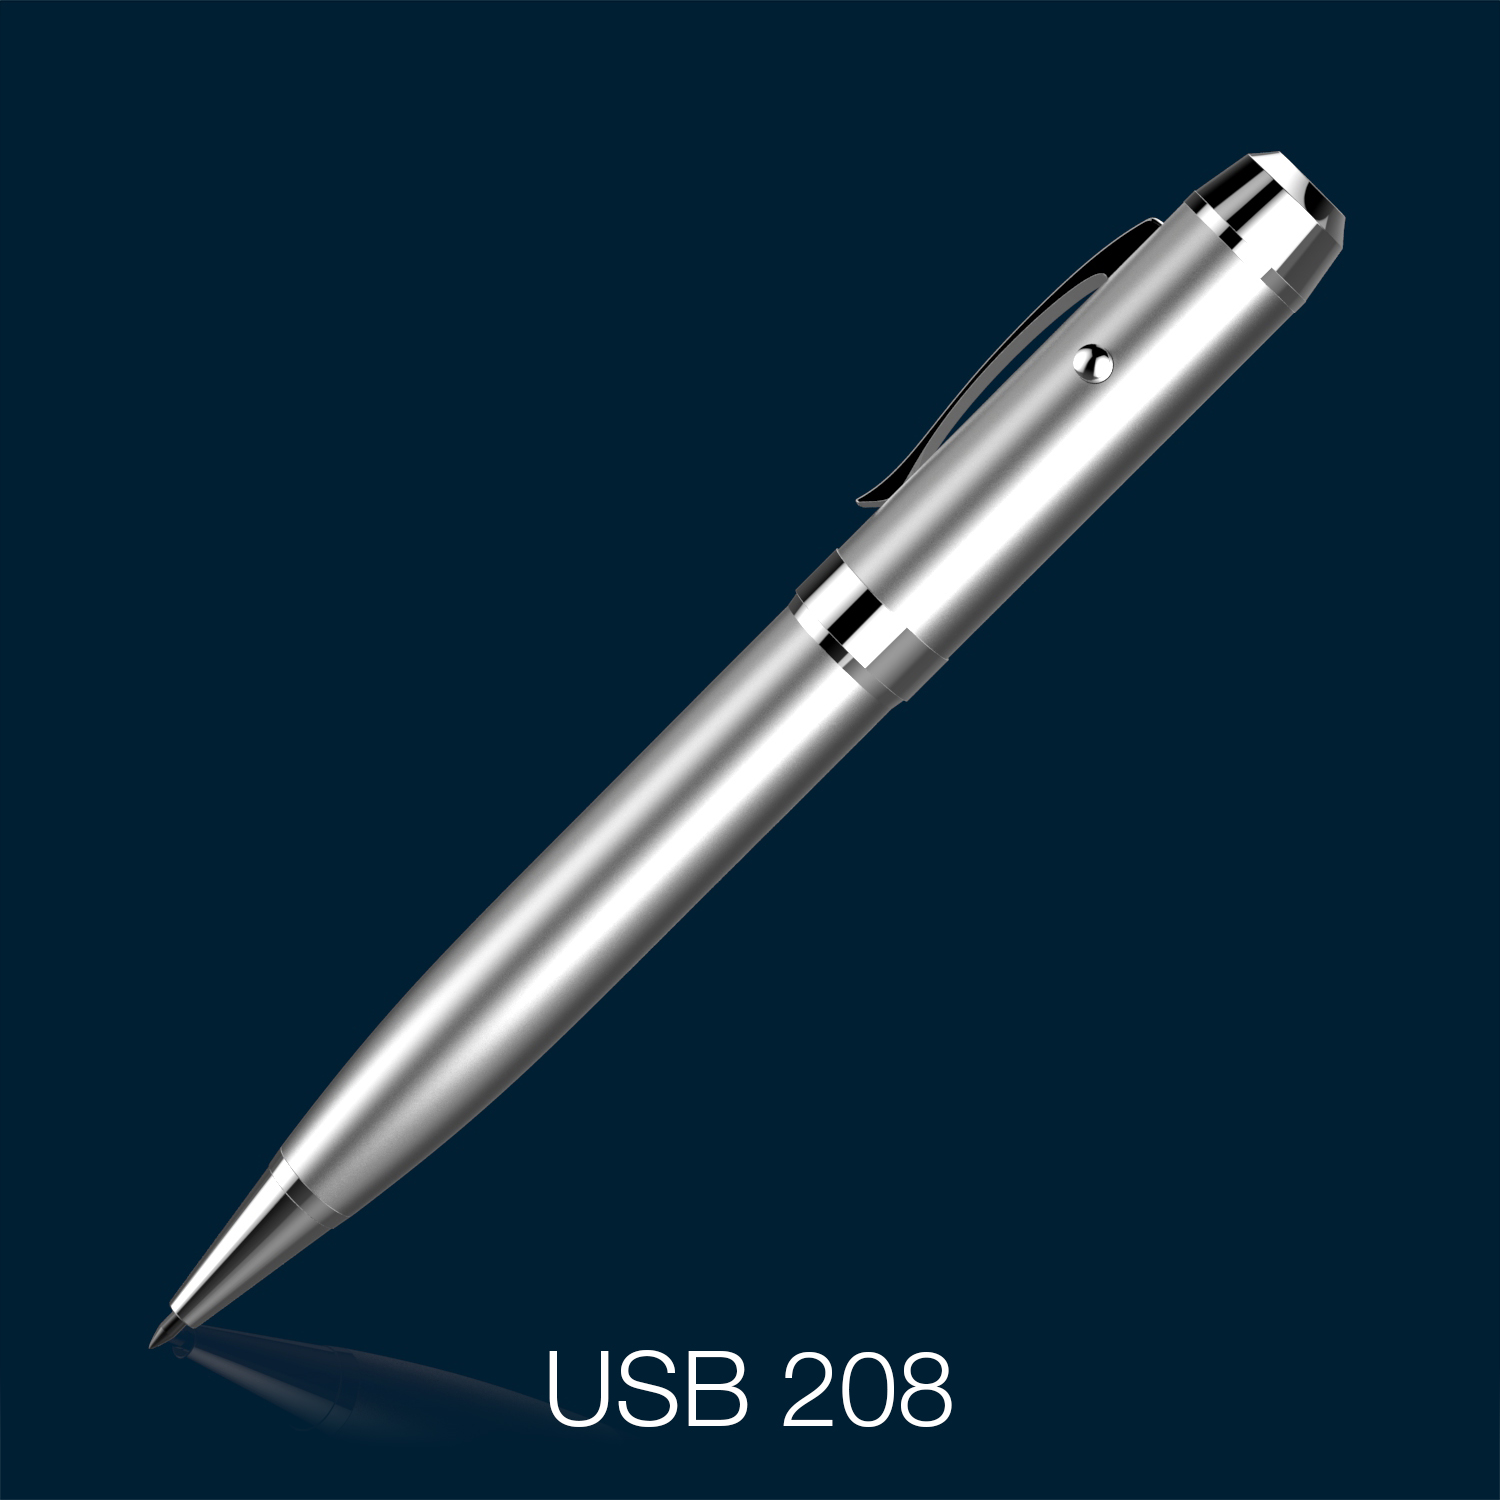 USB 208